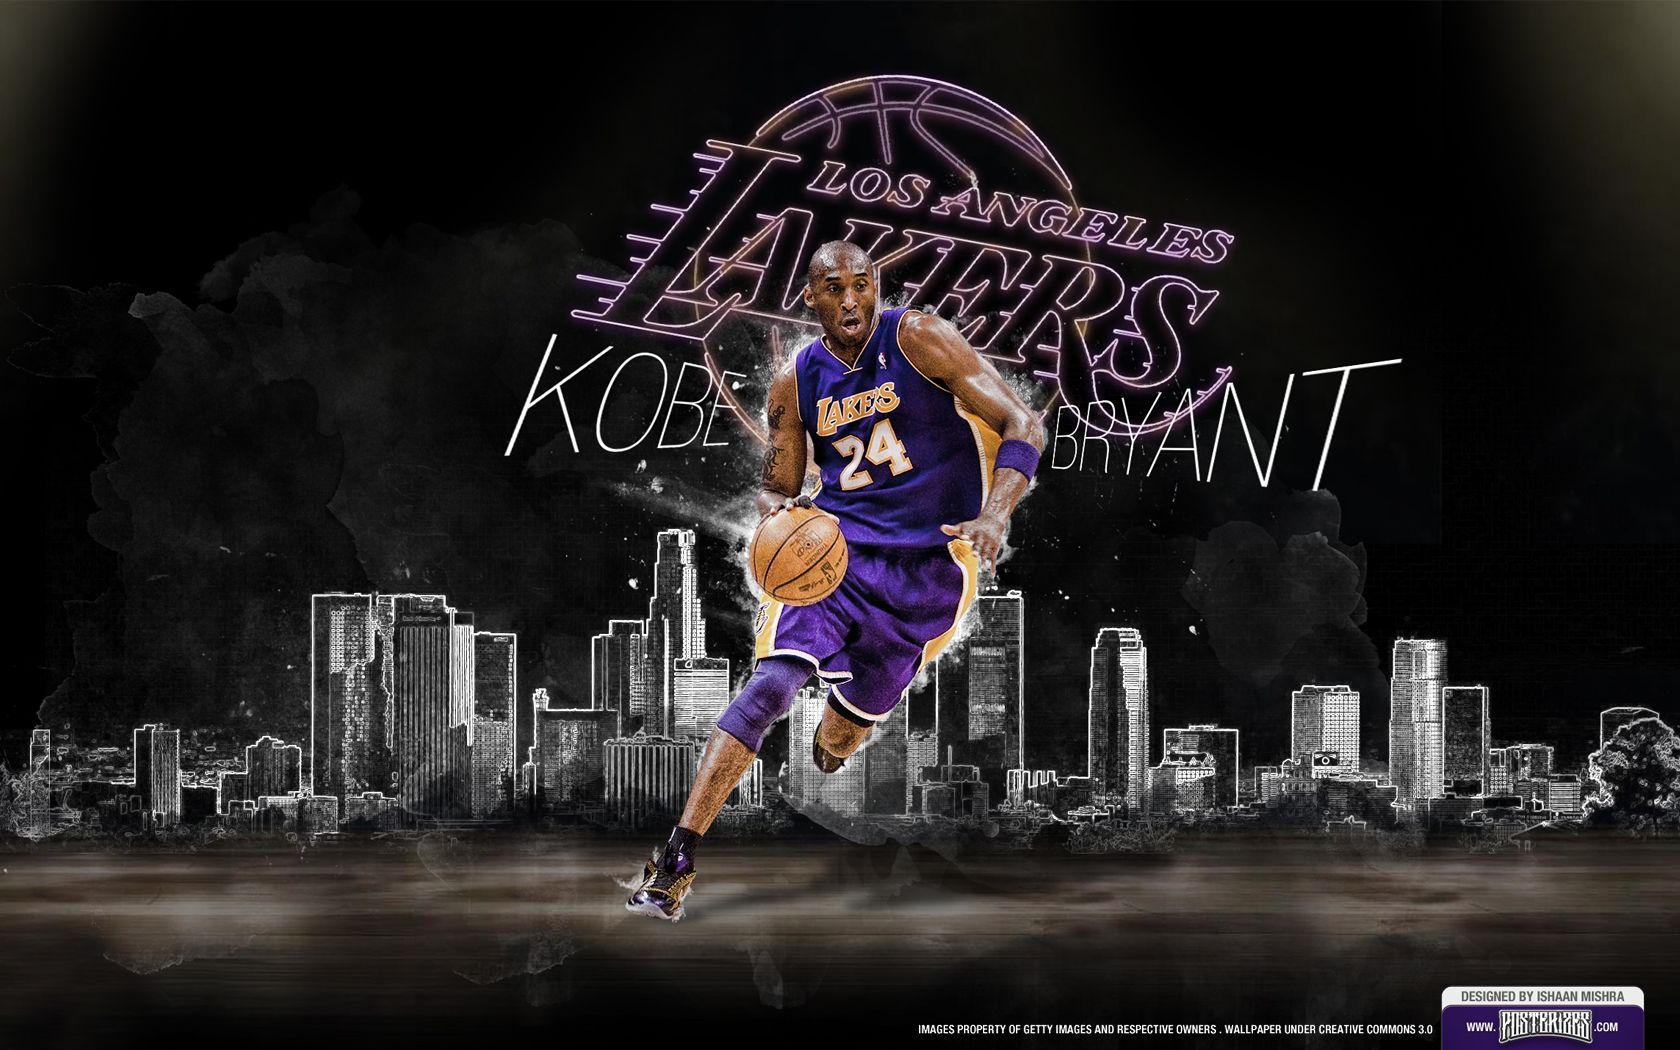 Kobe Bryant Basketball Player Profile & Info - Sports Players